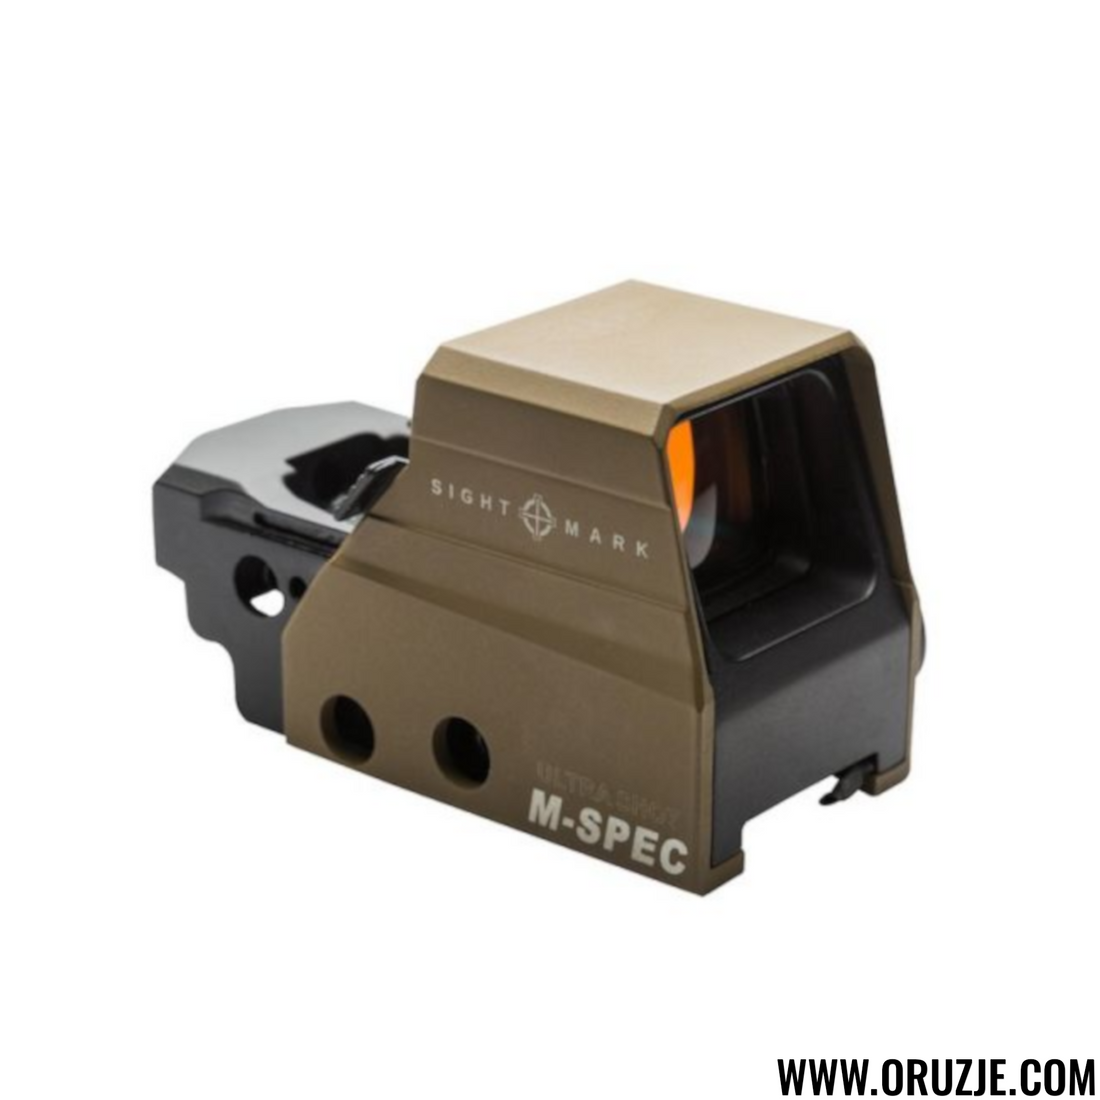 Sightmark Ultra Shot M-spec Fms Reflex Sight Dark oruzje doo